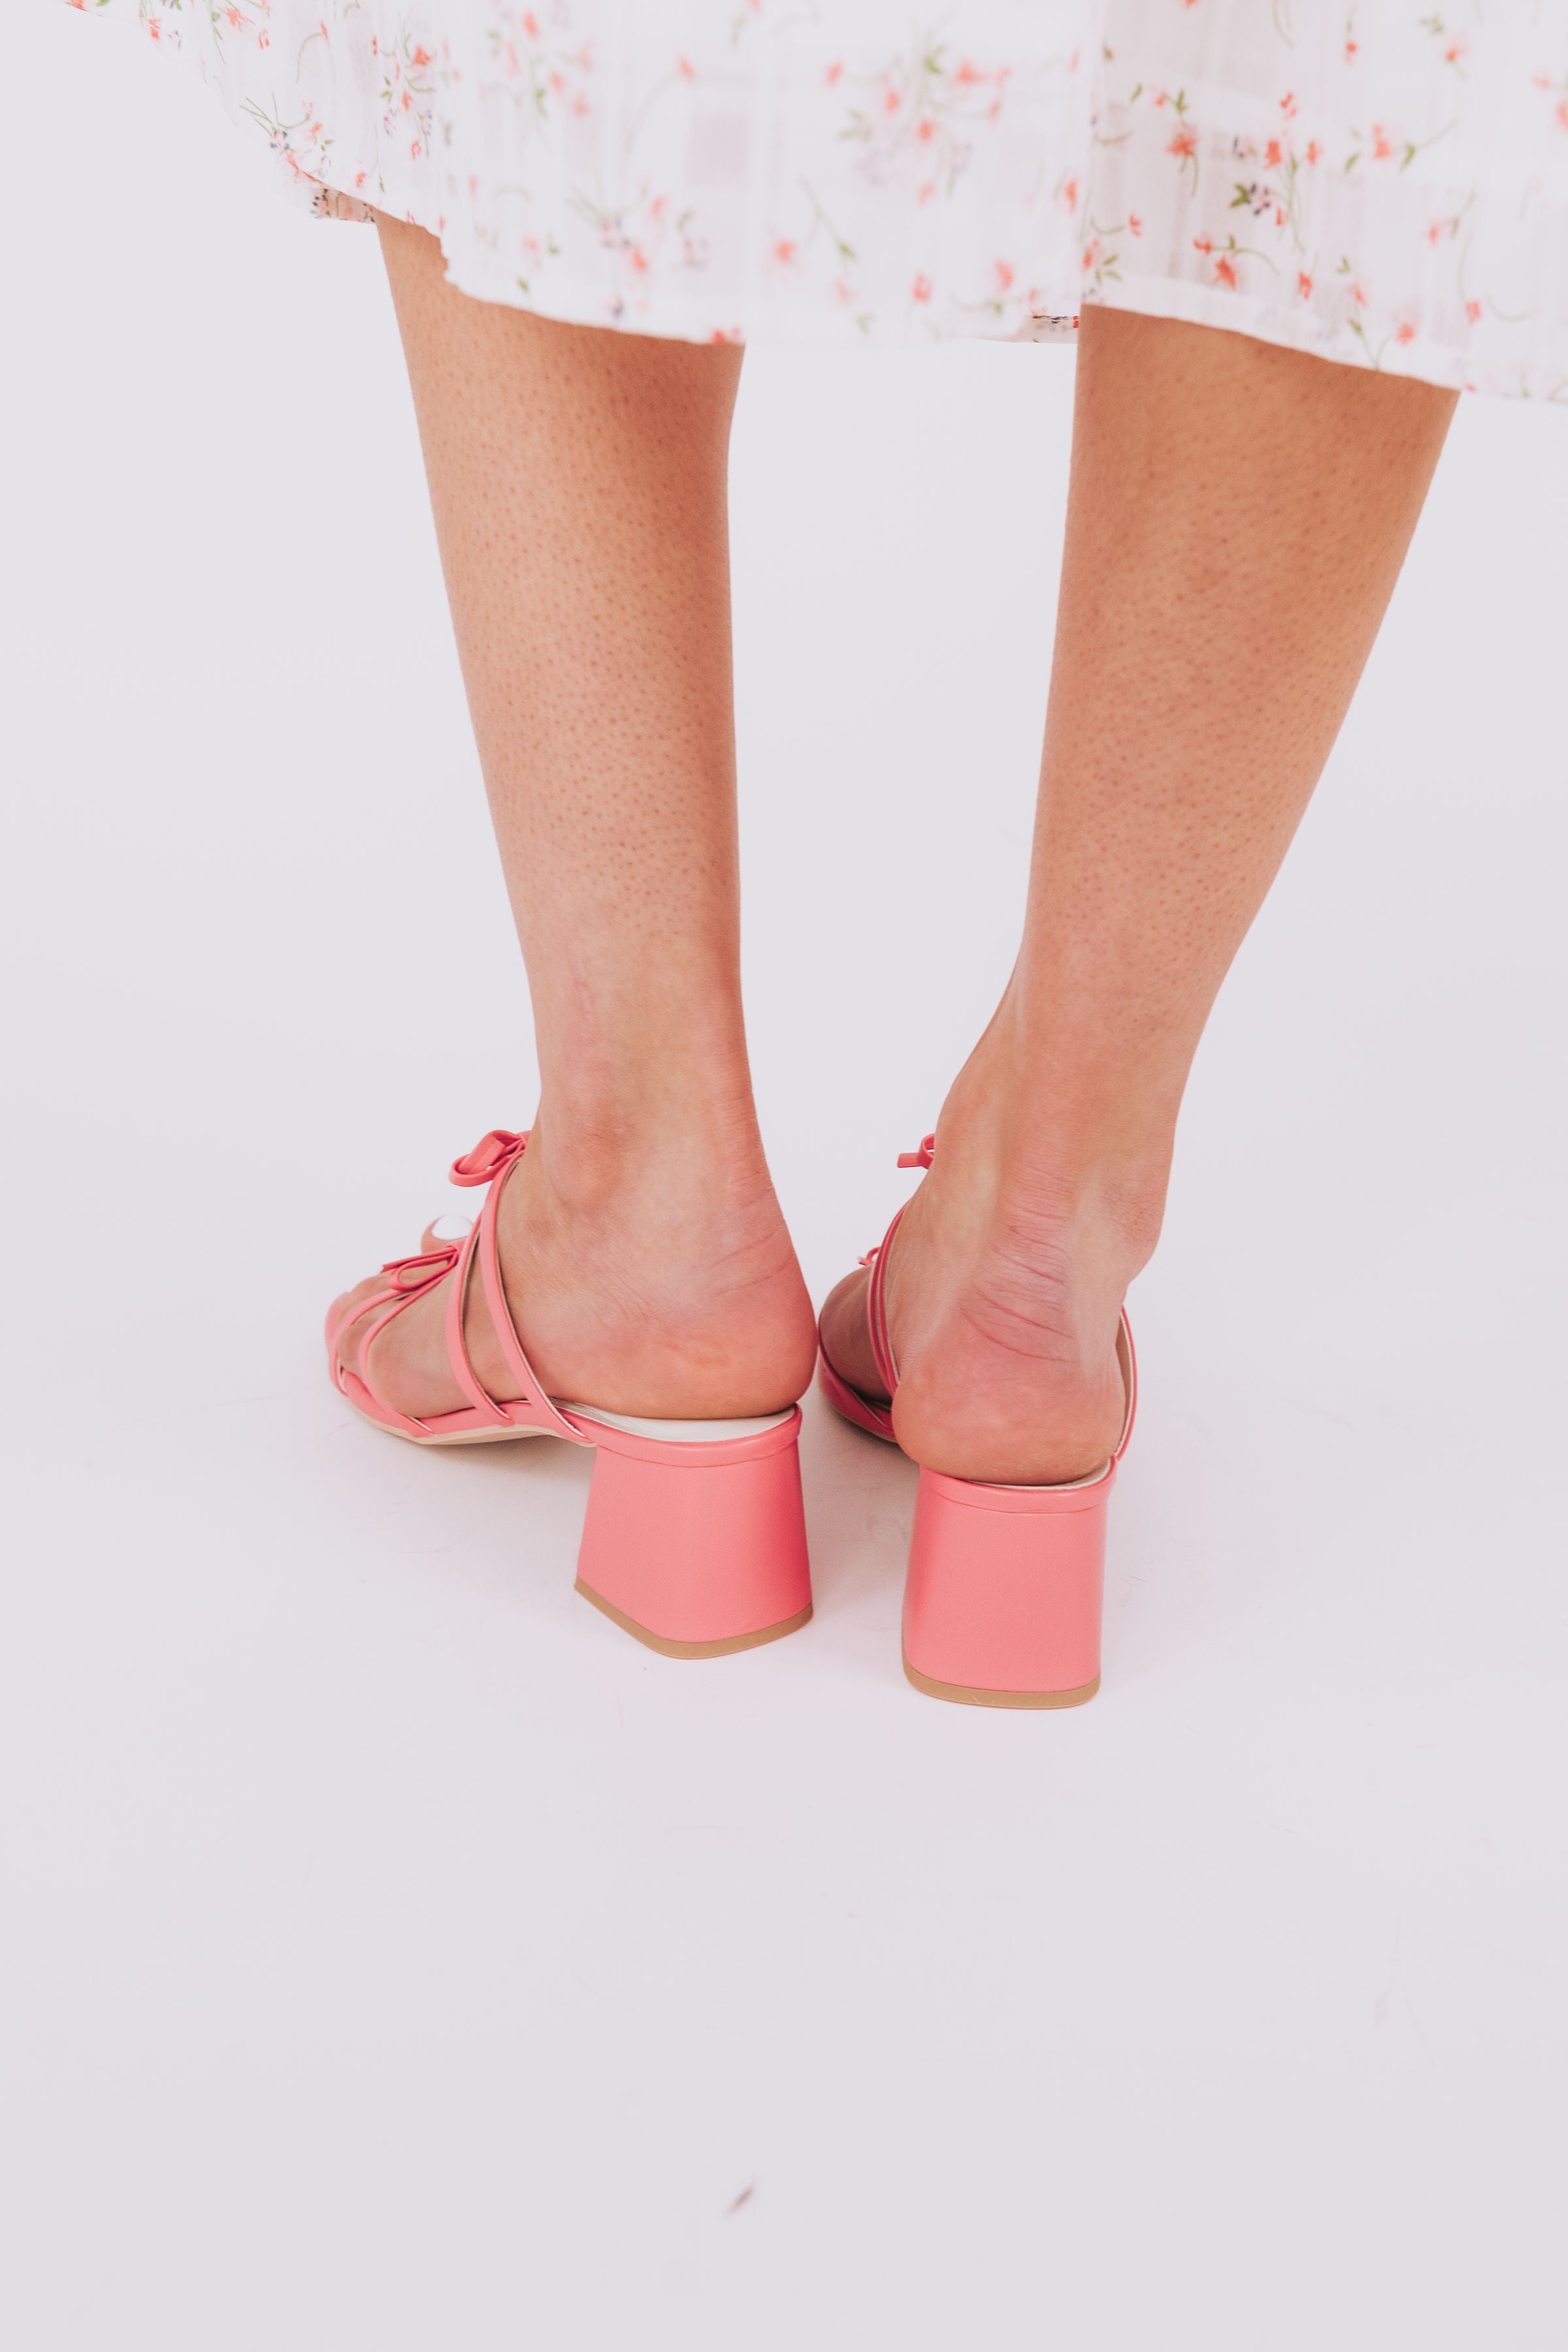 The Maci Pink Heel